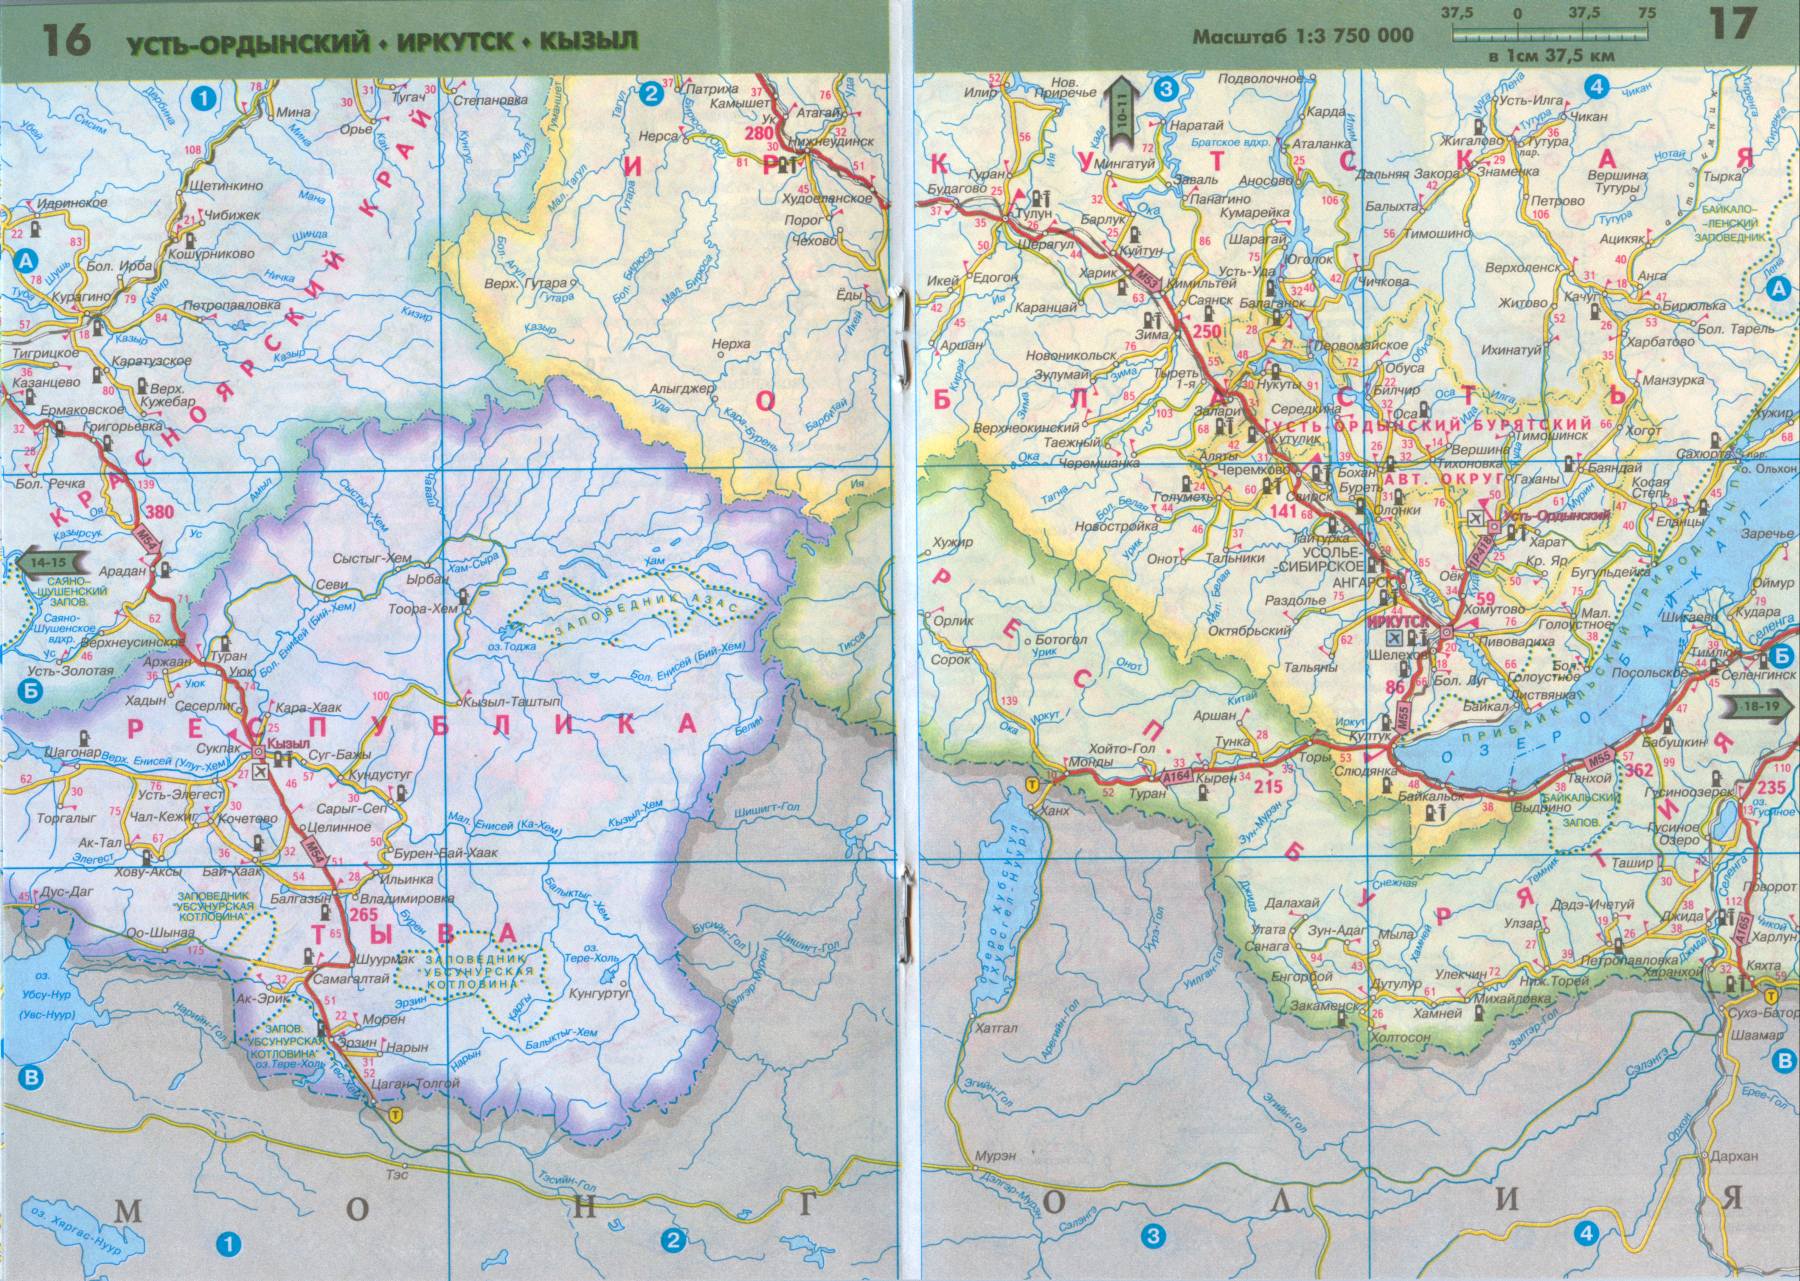  Атлас автодорог Сибири. Карта дорог Сибирского федерального округа России, B1 - 